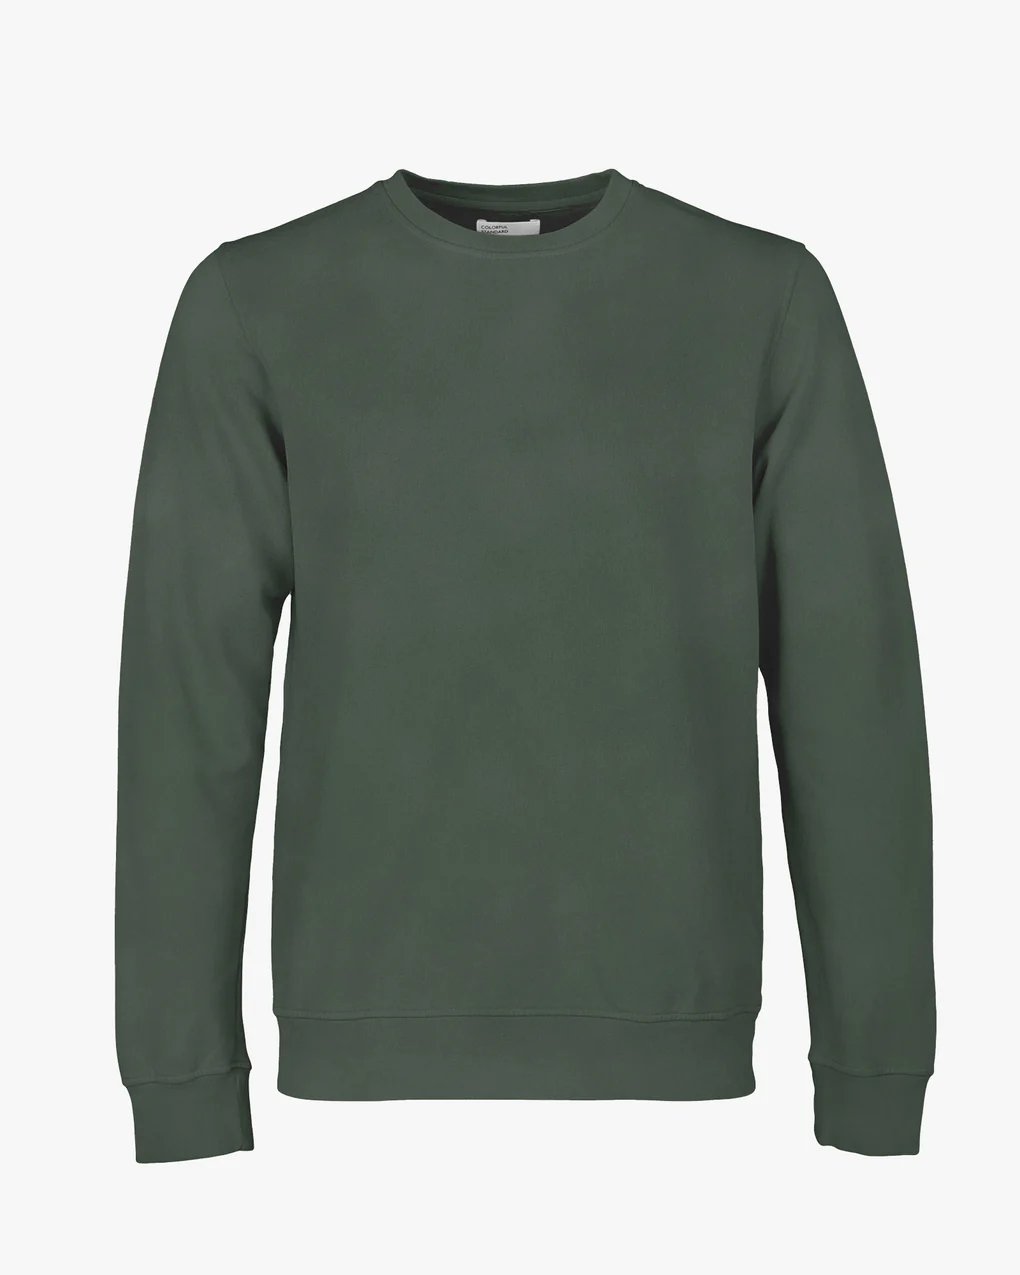 Classic Organic Crew Sweater - Colorful Standard - Danali - CS1005-MidnightForest-M